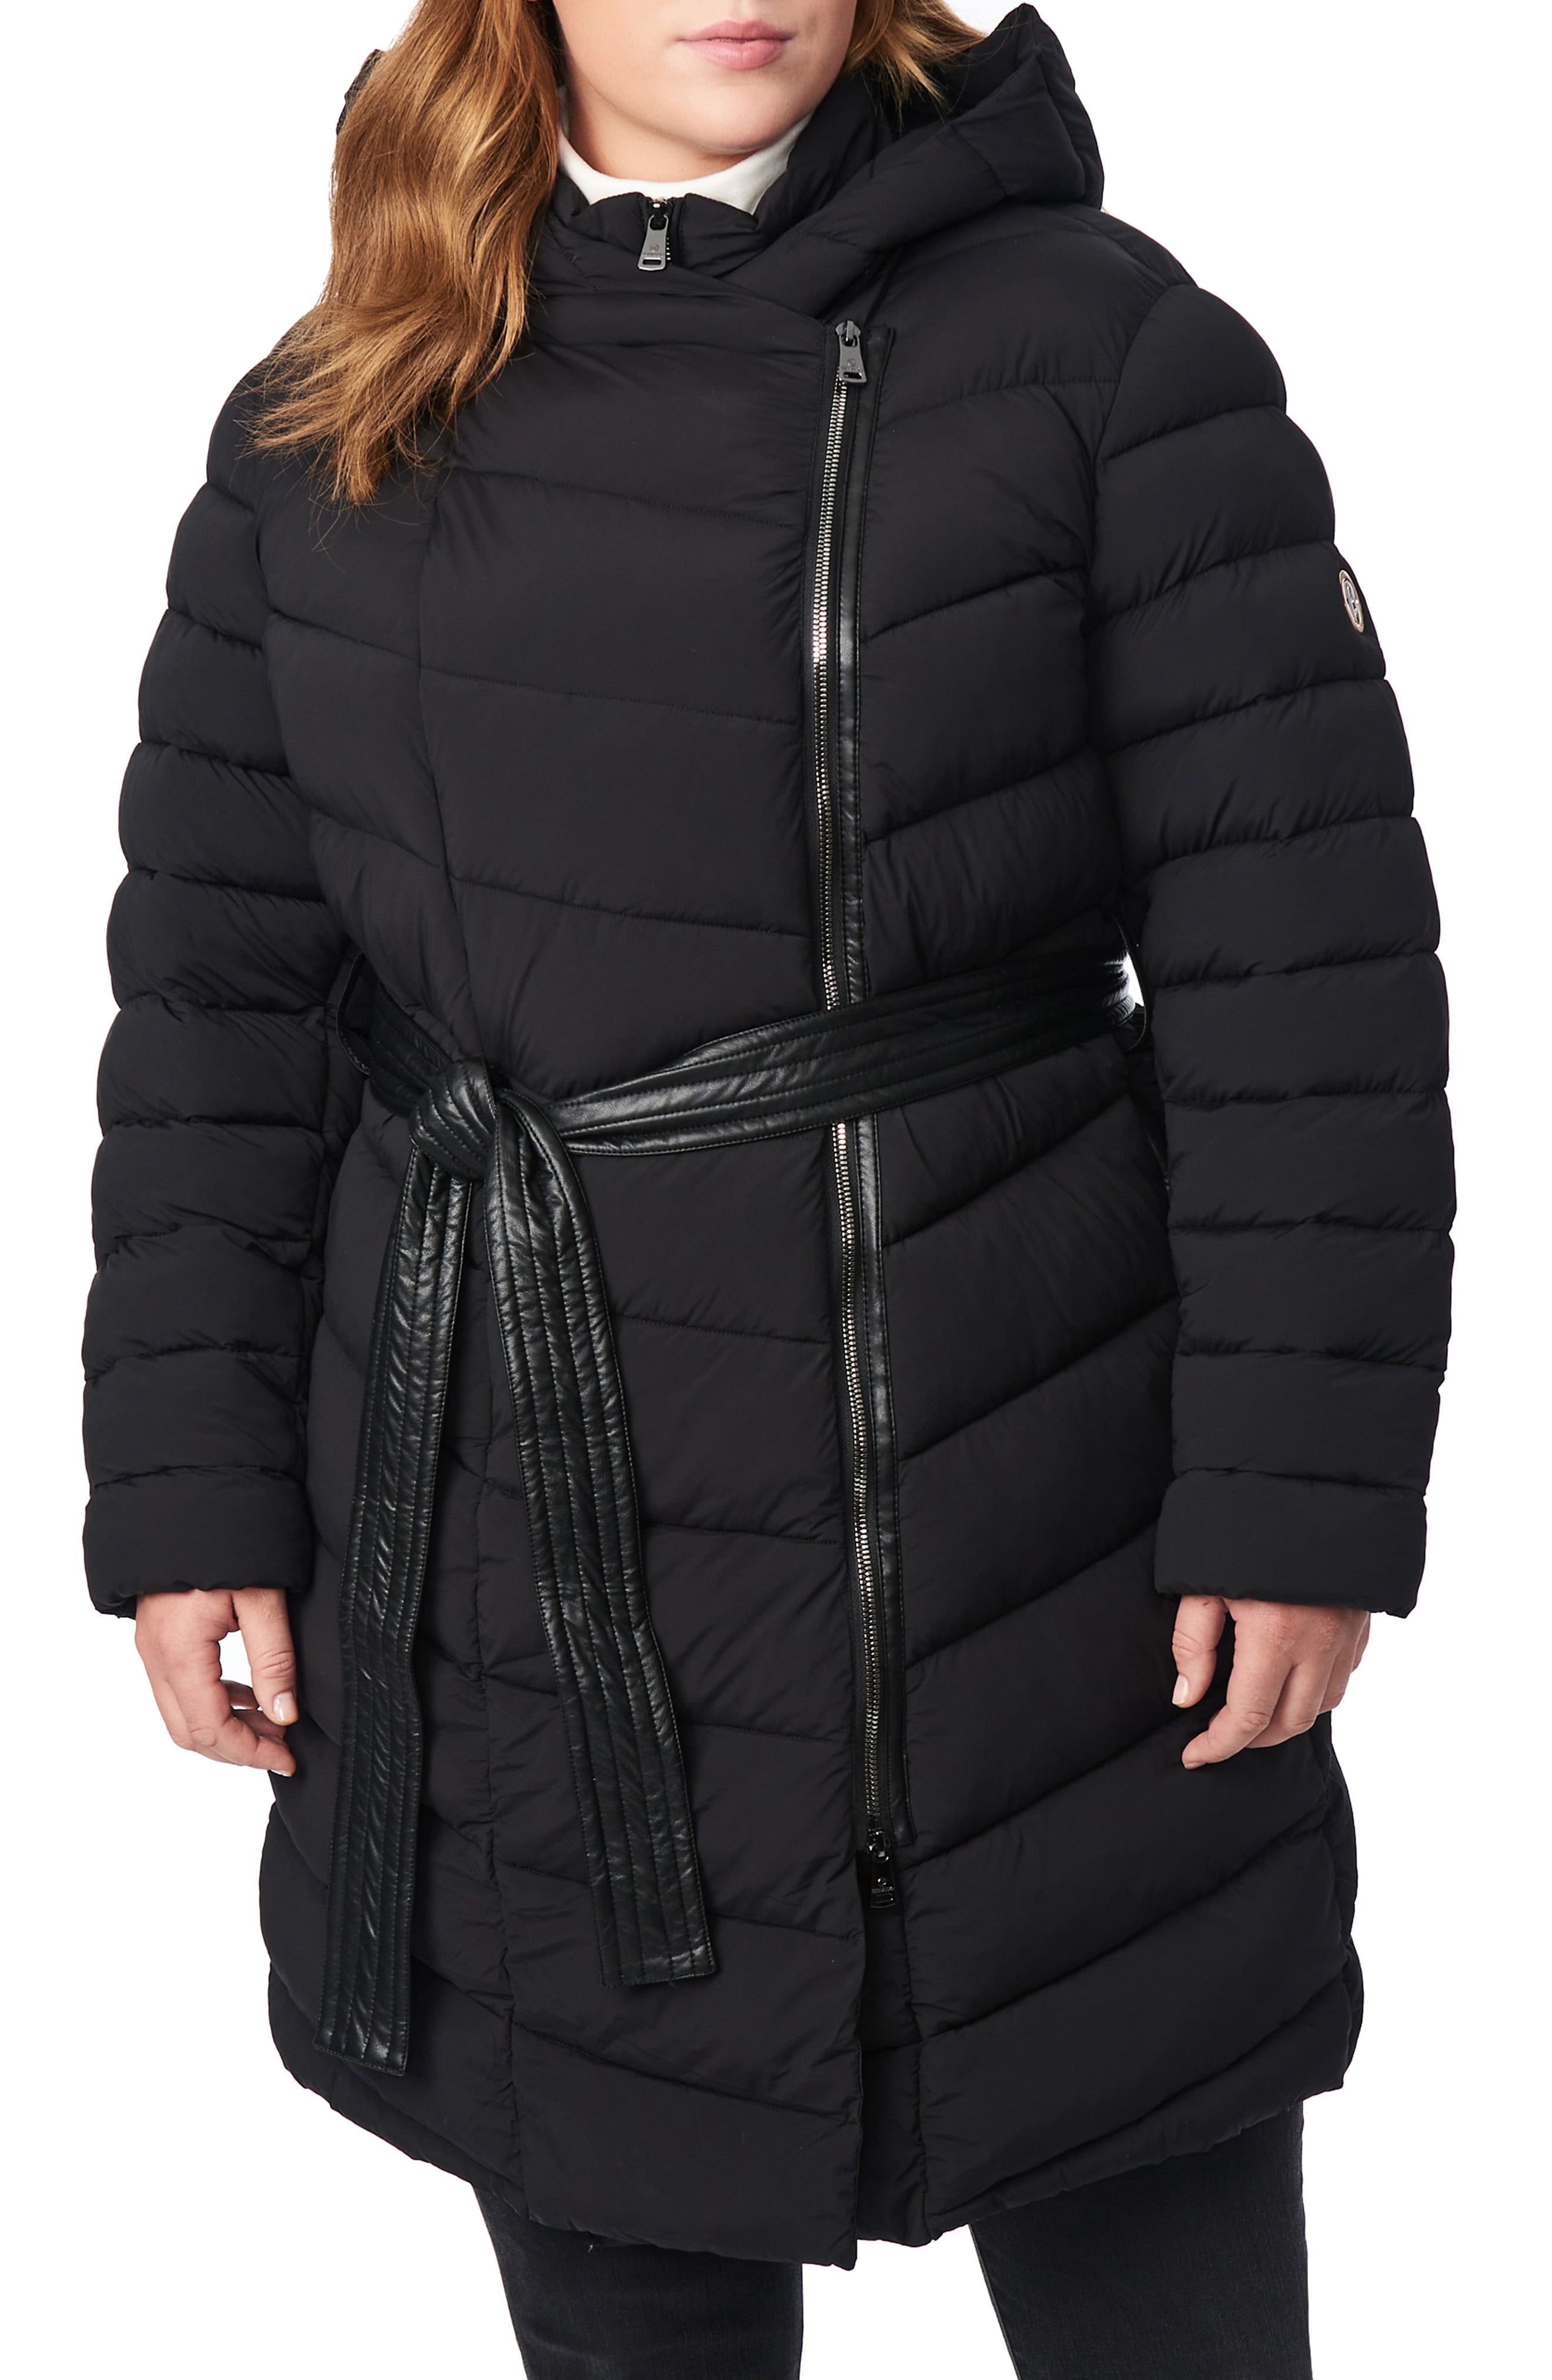 winter coats size 20